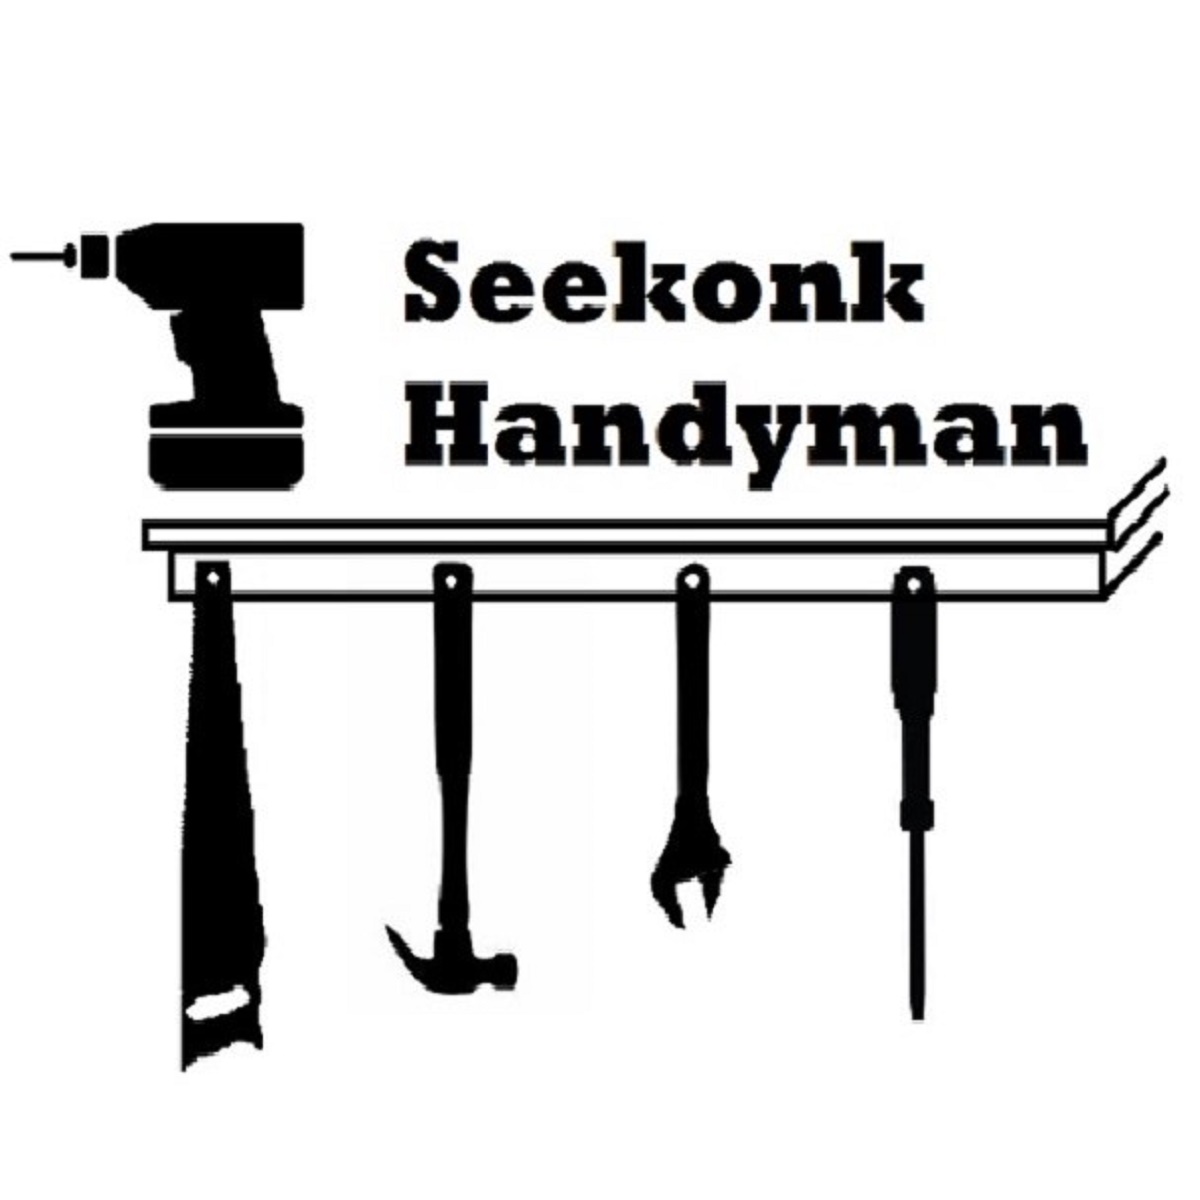 Seekonk Handyman